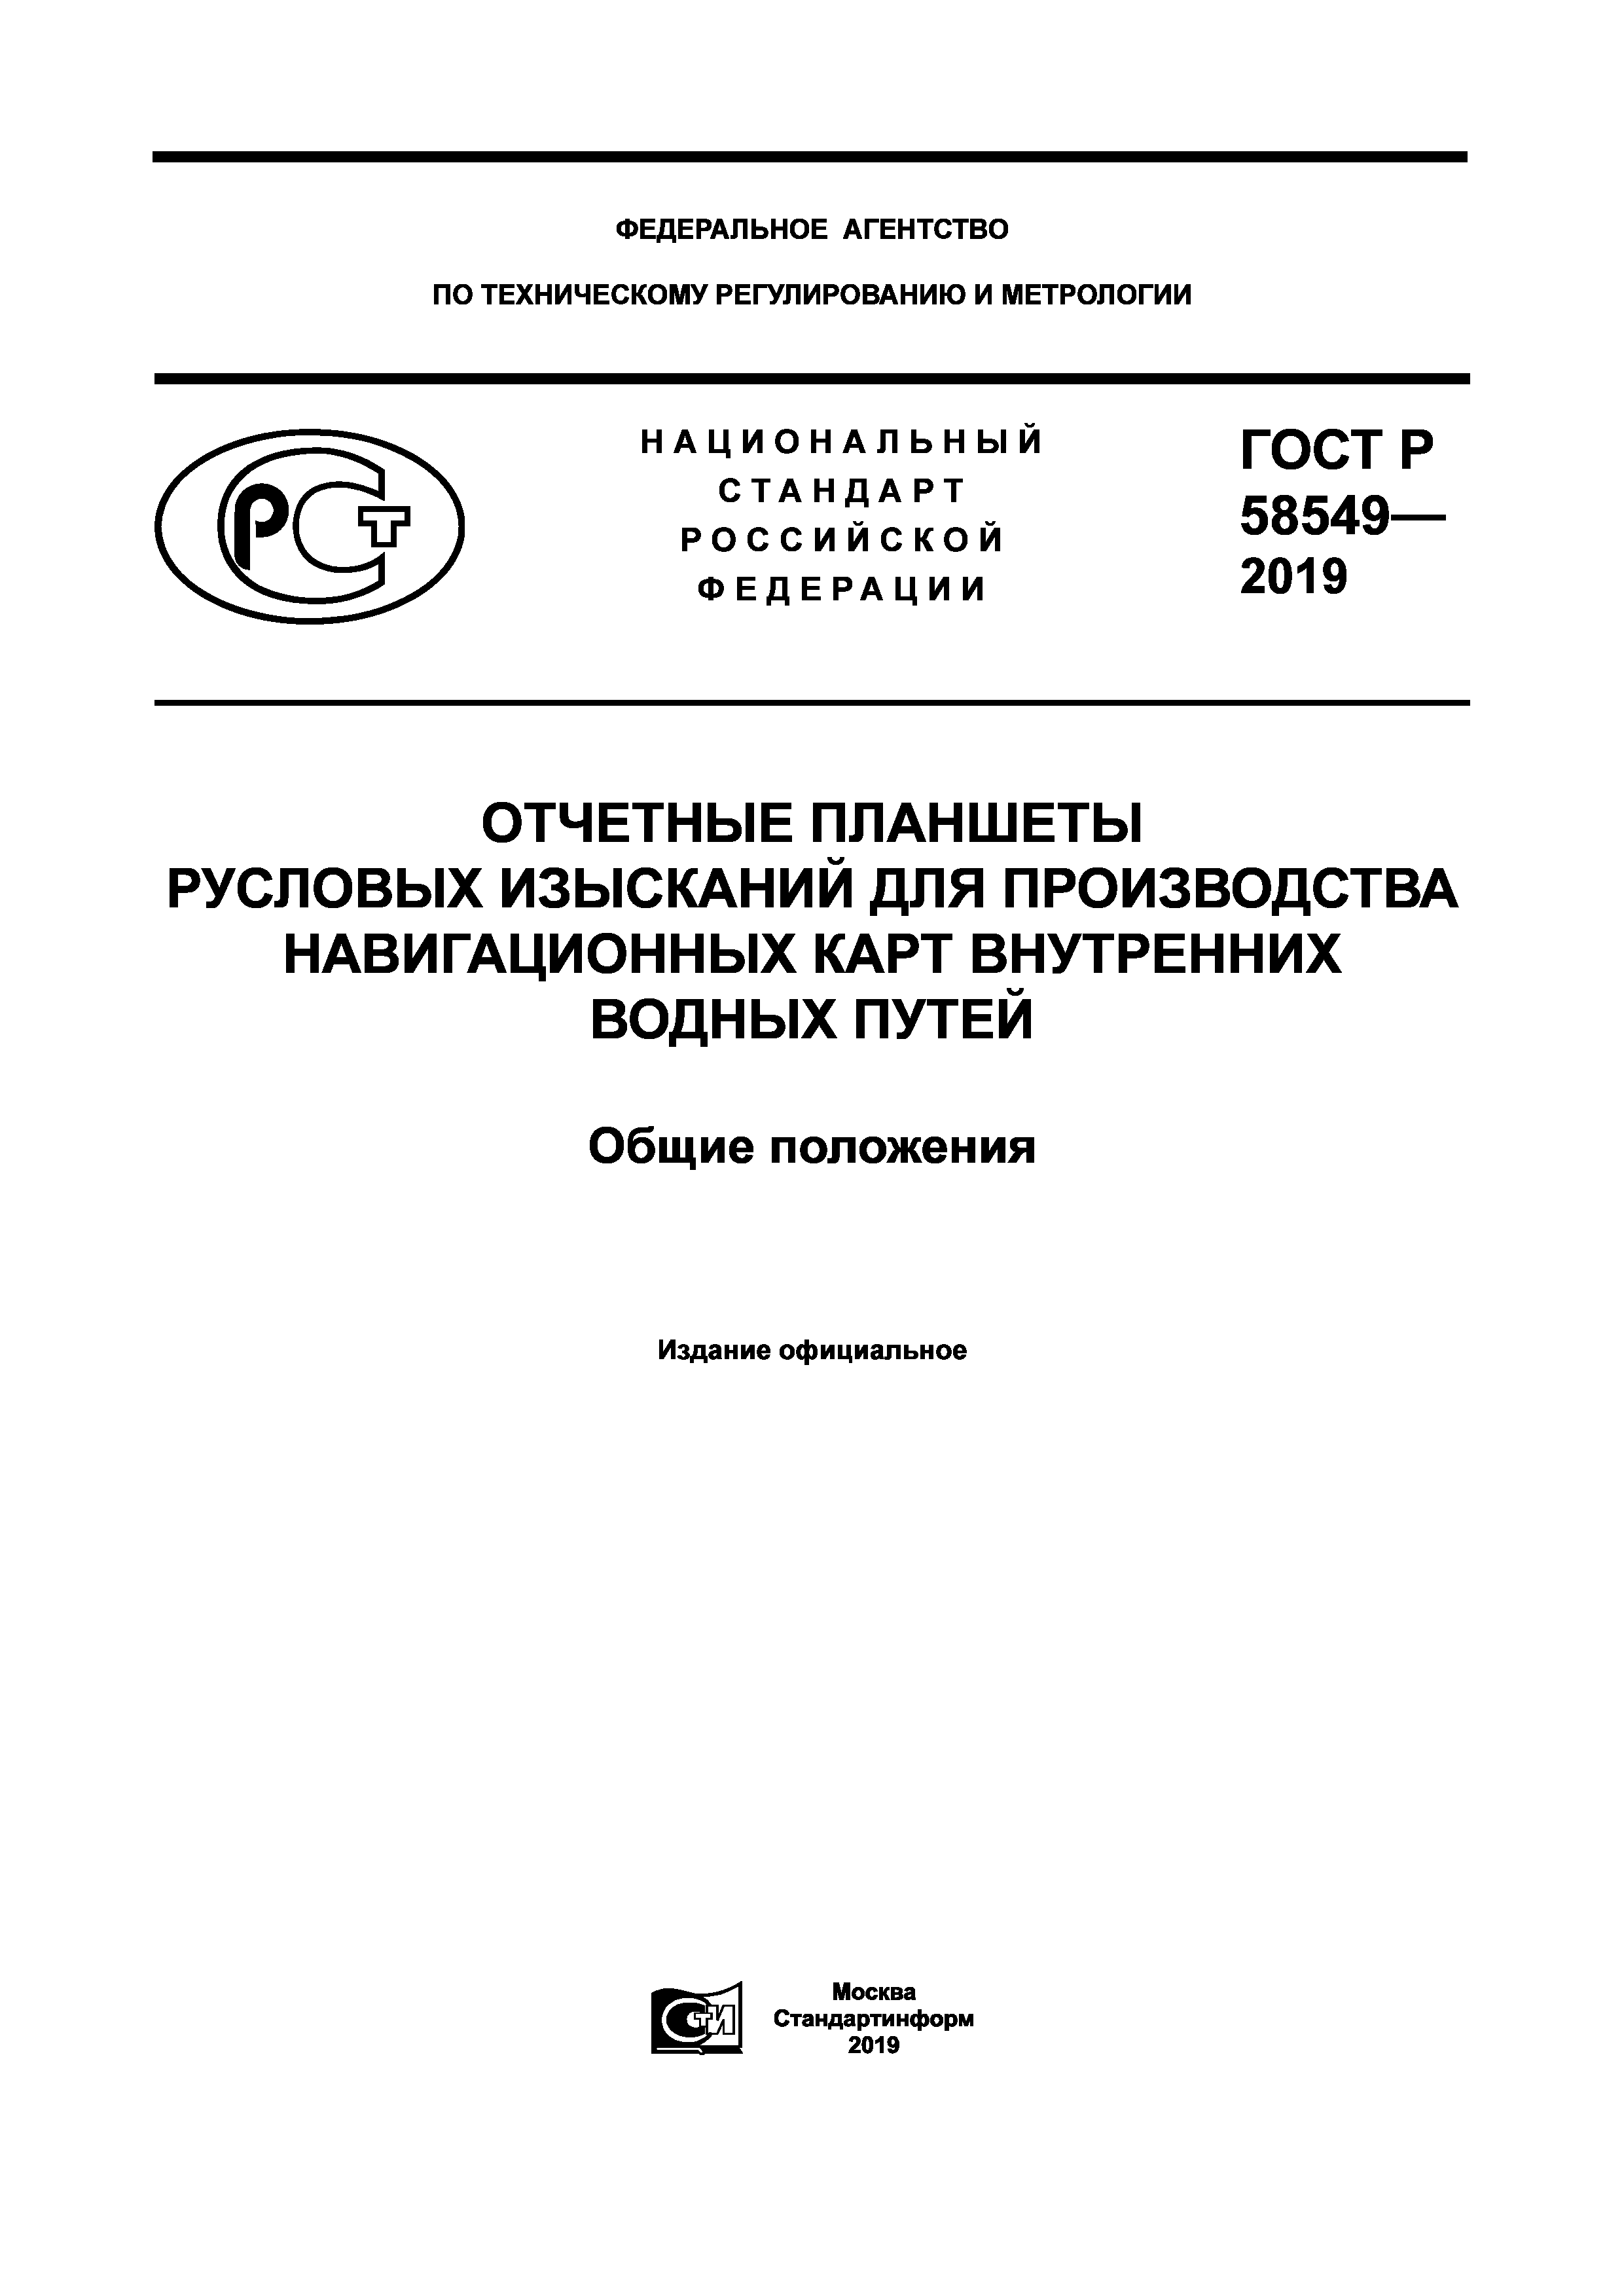 ГОСТ Р 58549-2019